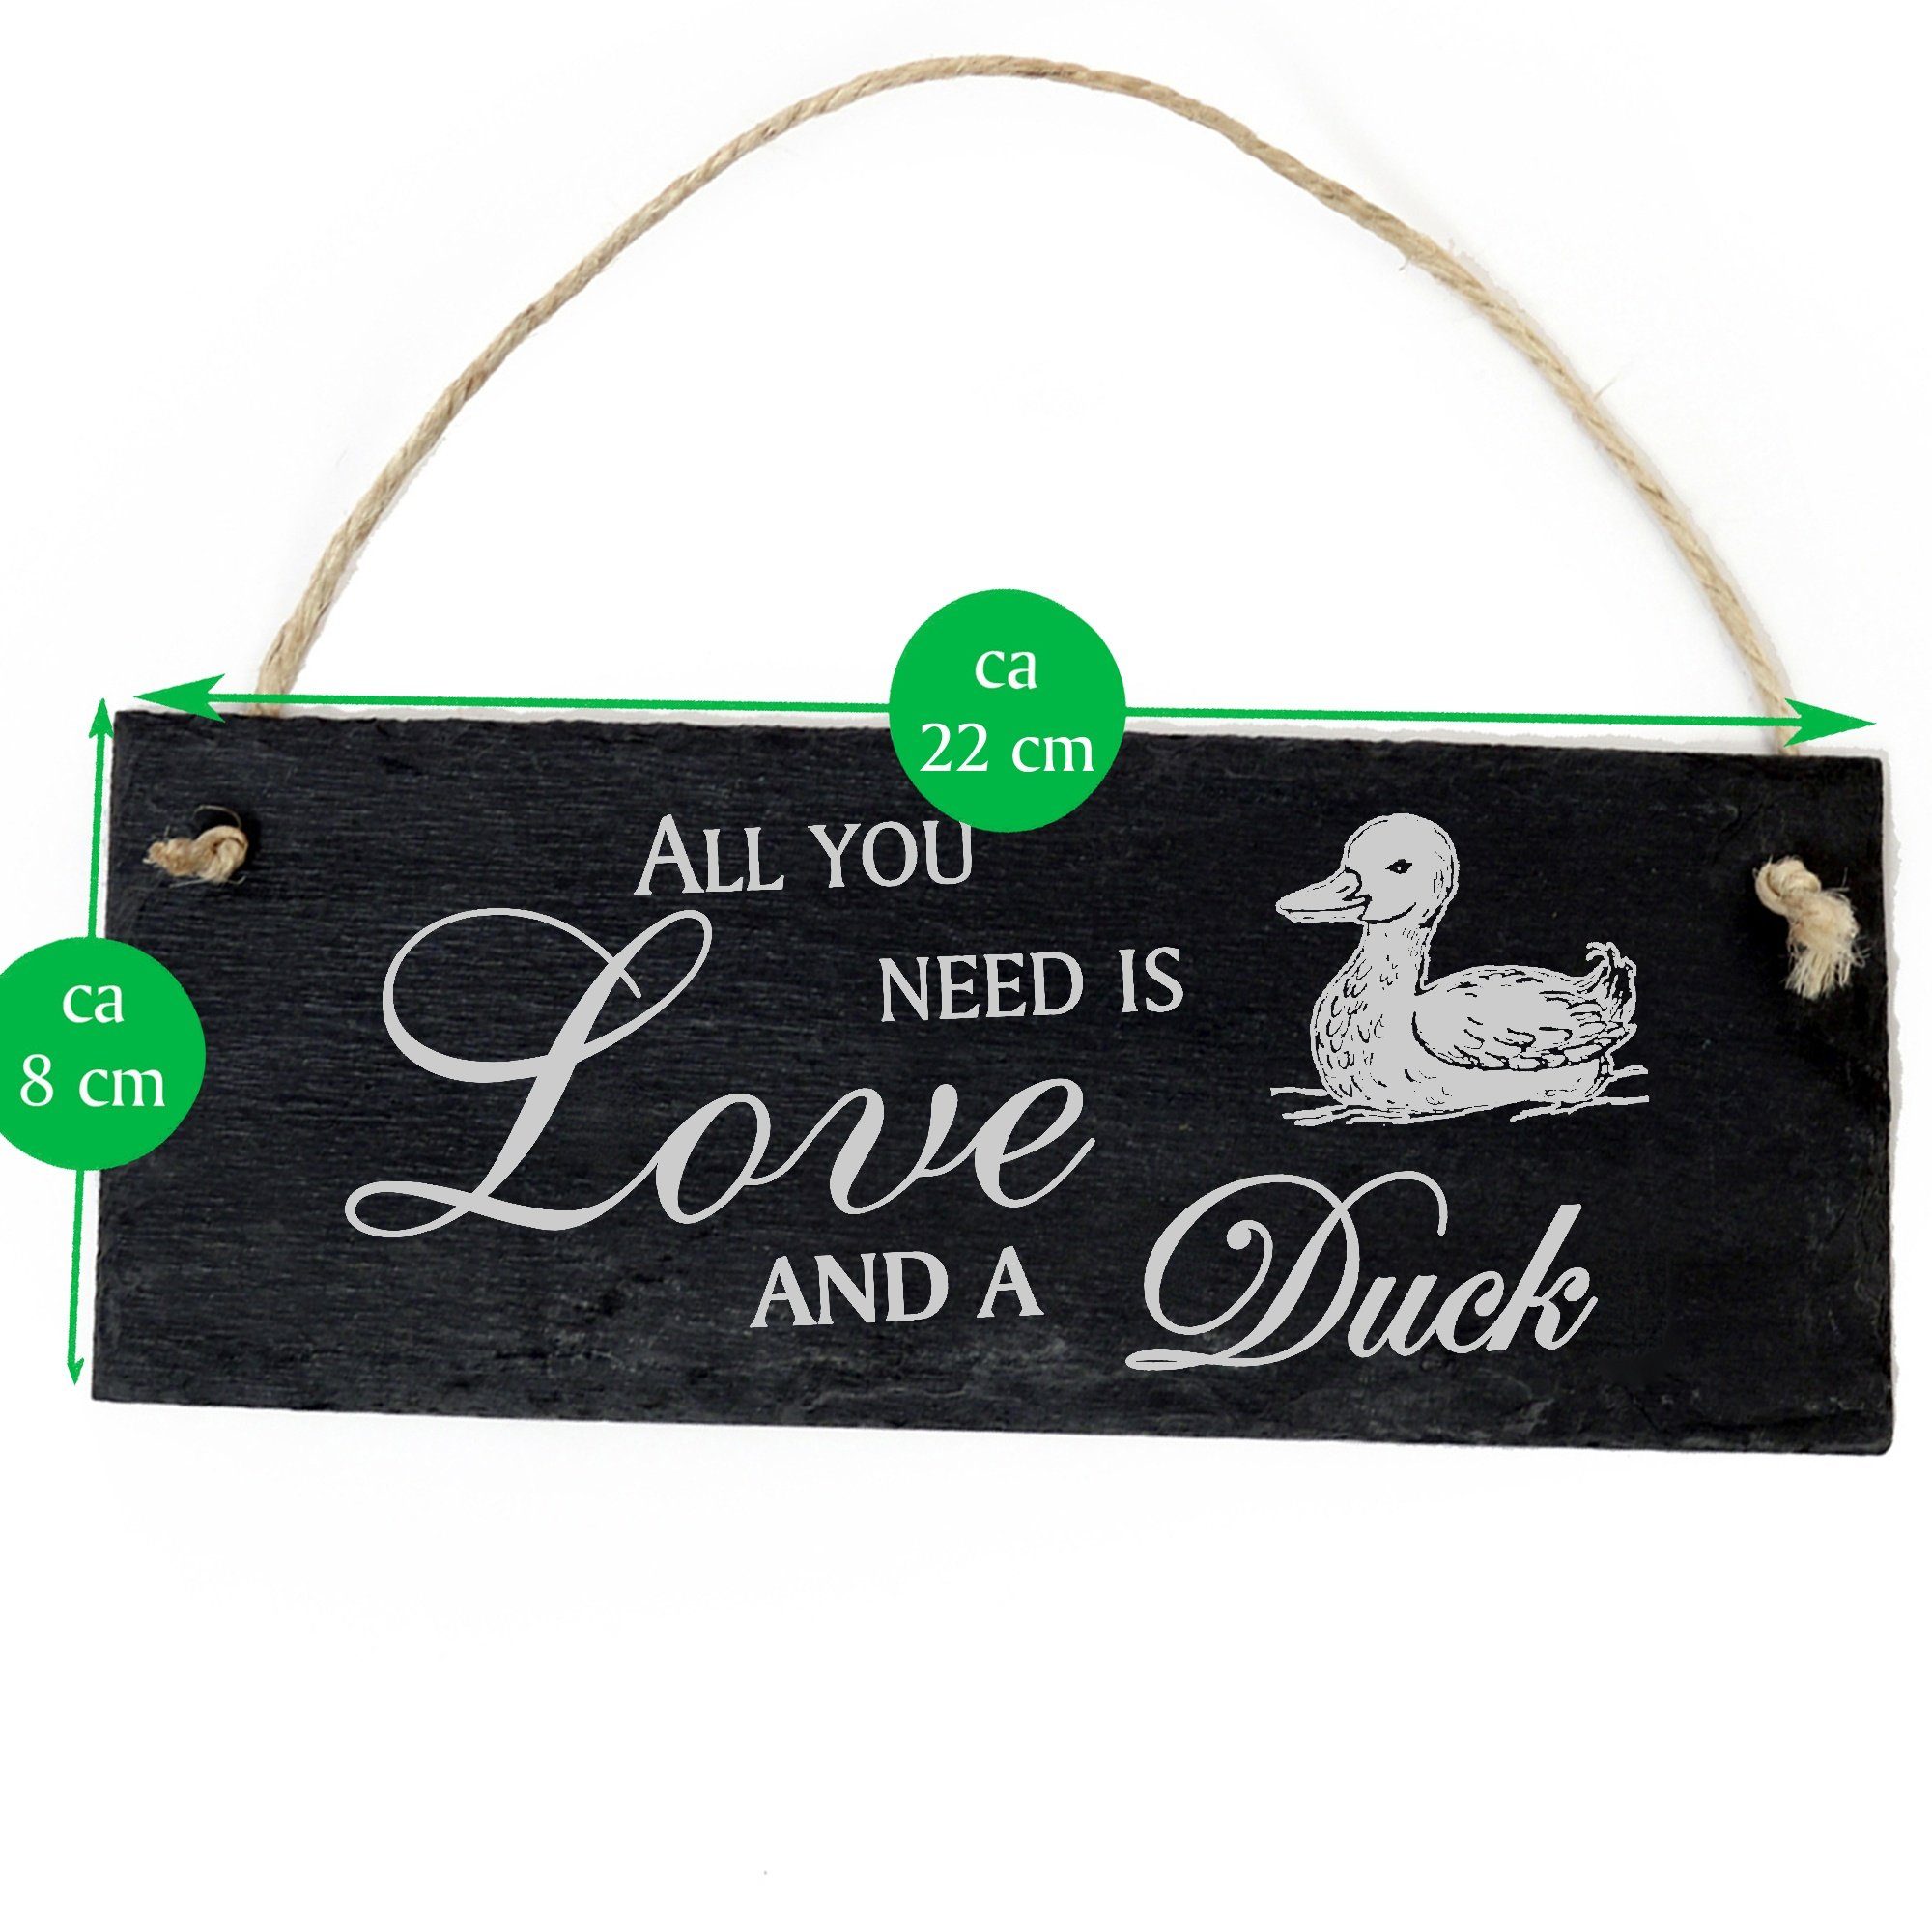 Dekolando Hängedekoration niedliche a Duck and All you is need Love 22x8cm Ente